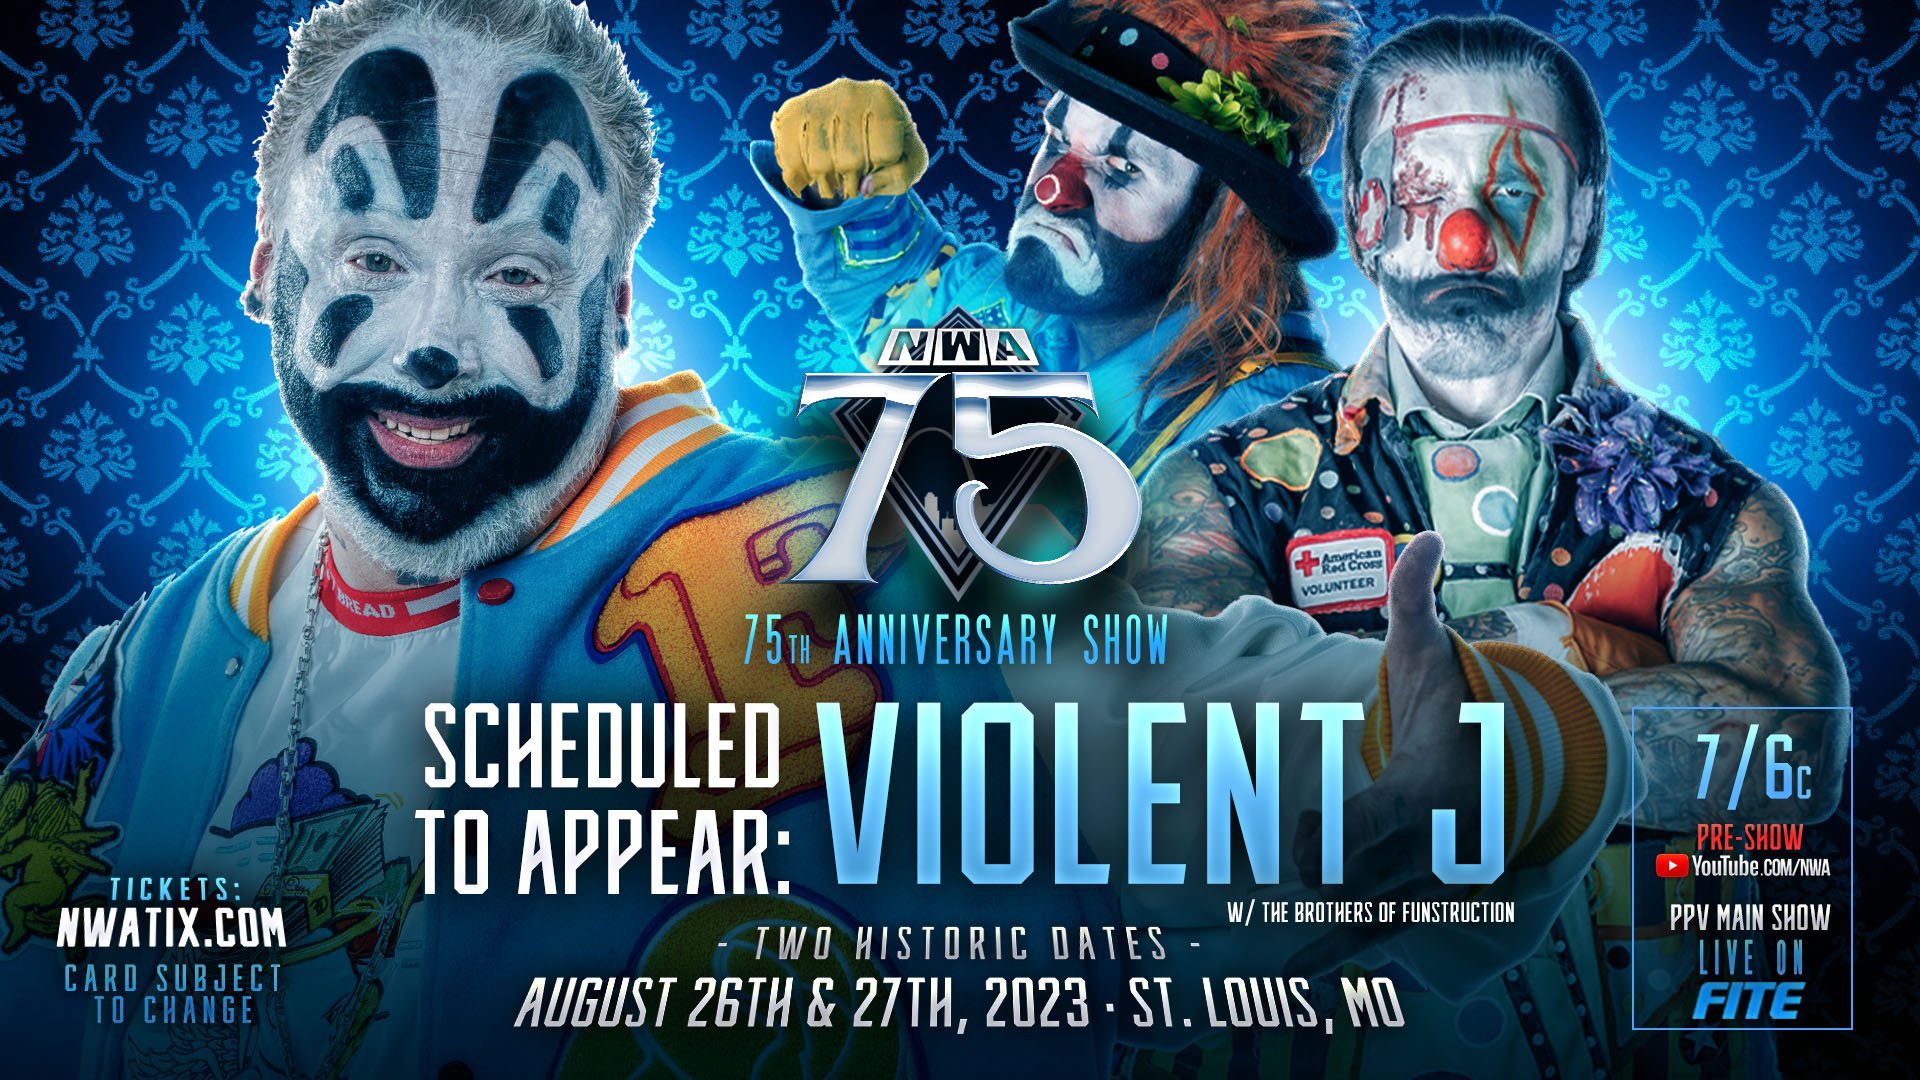 NWA 75 ANNOUNCEMENT (TWITTER) - VIOLENT J APPEARANCE.jpg